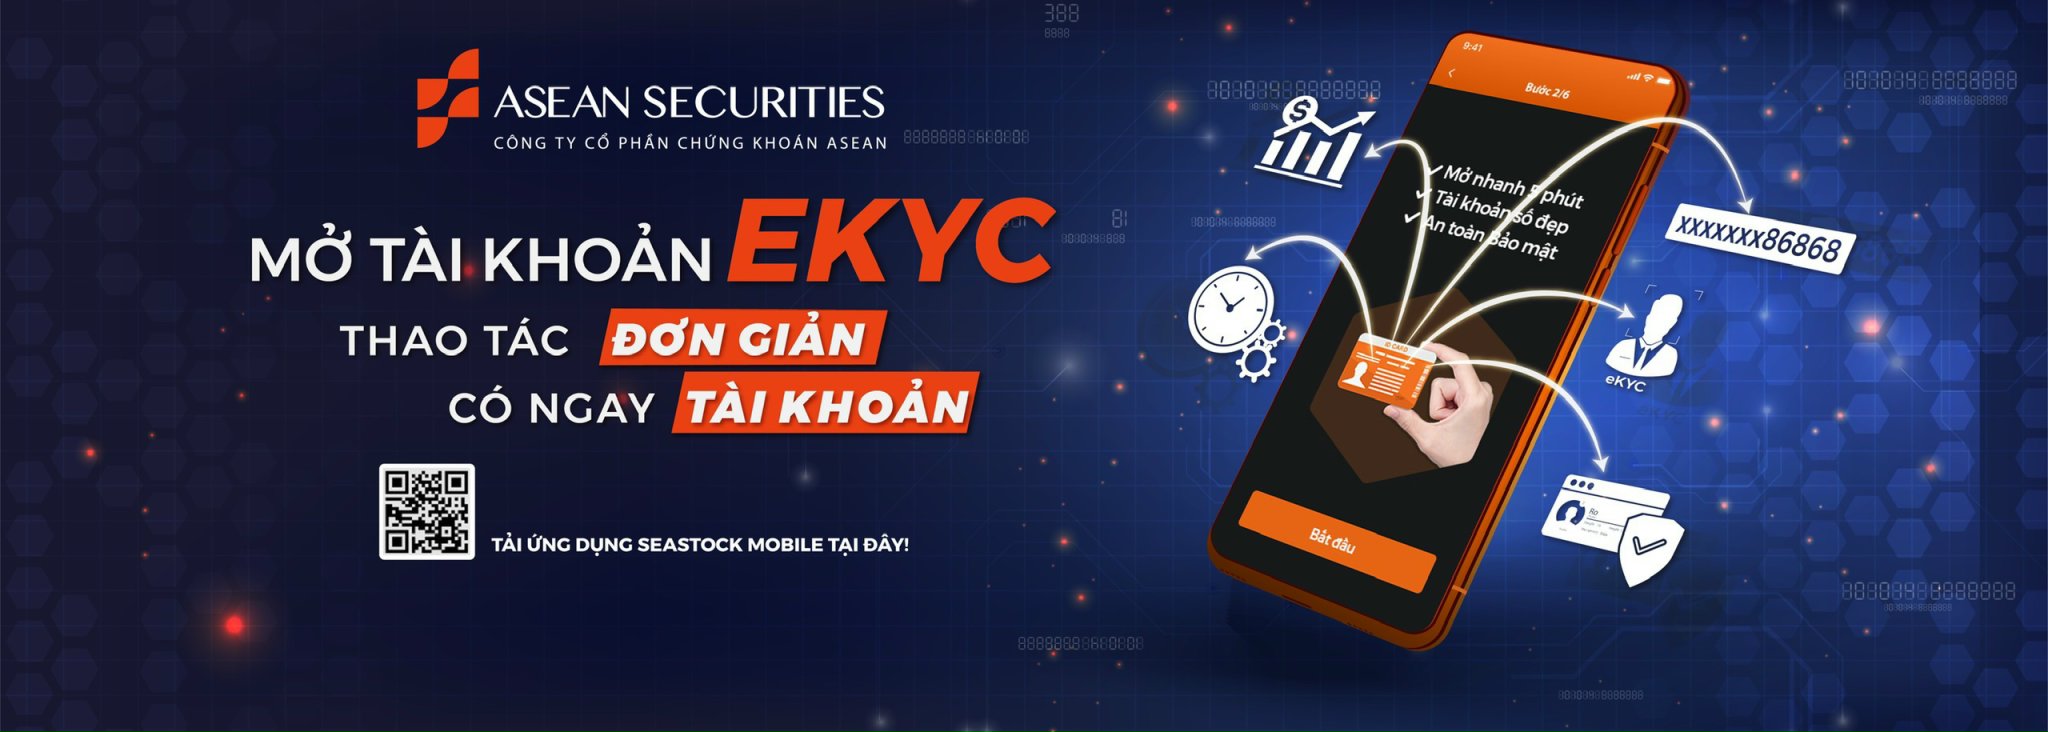 Banner ekyc website mới